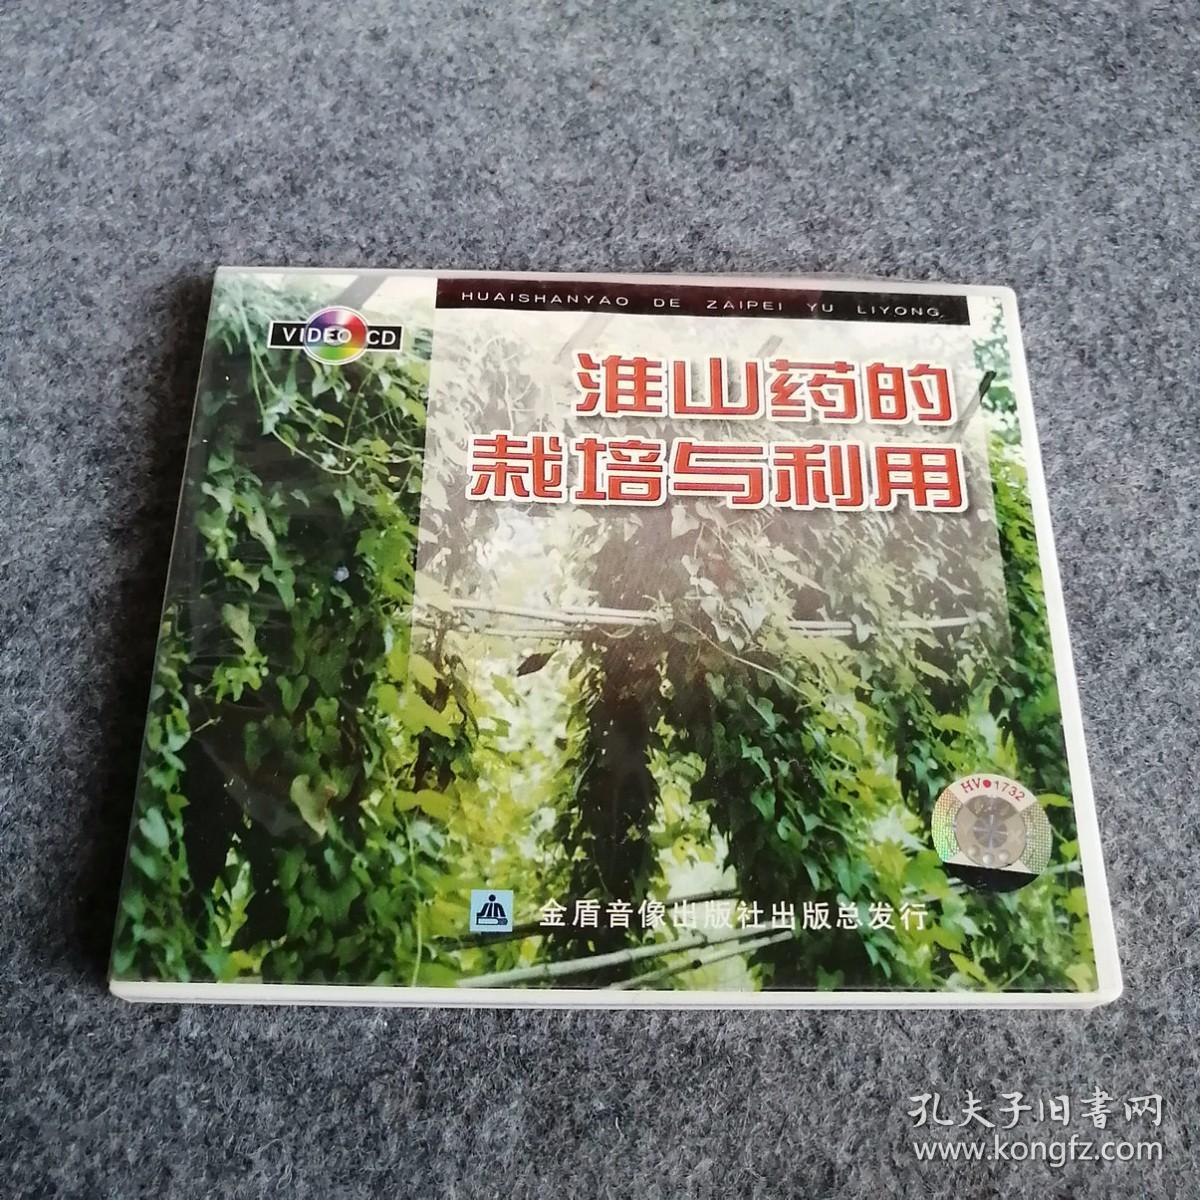 VCD光盘小影碟 淮山药的栽培与利用 盒装1张碟片